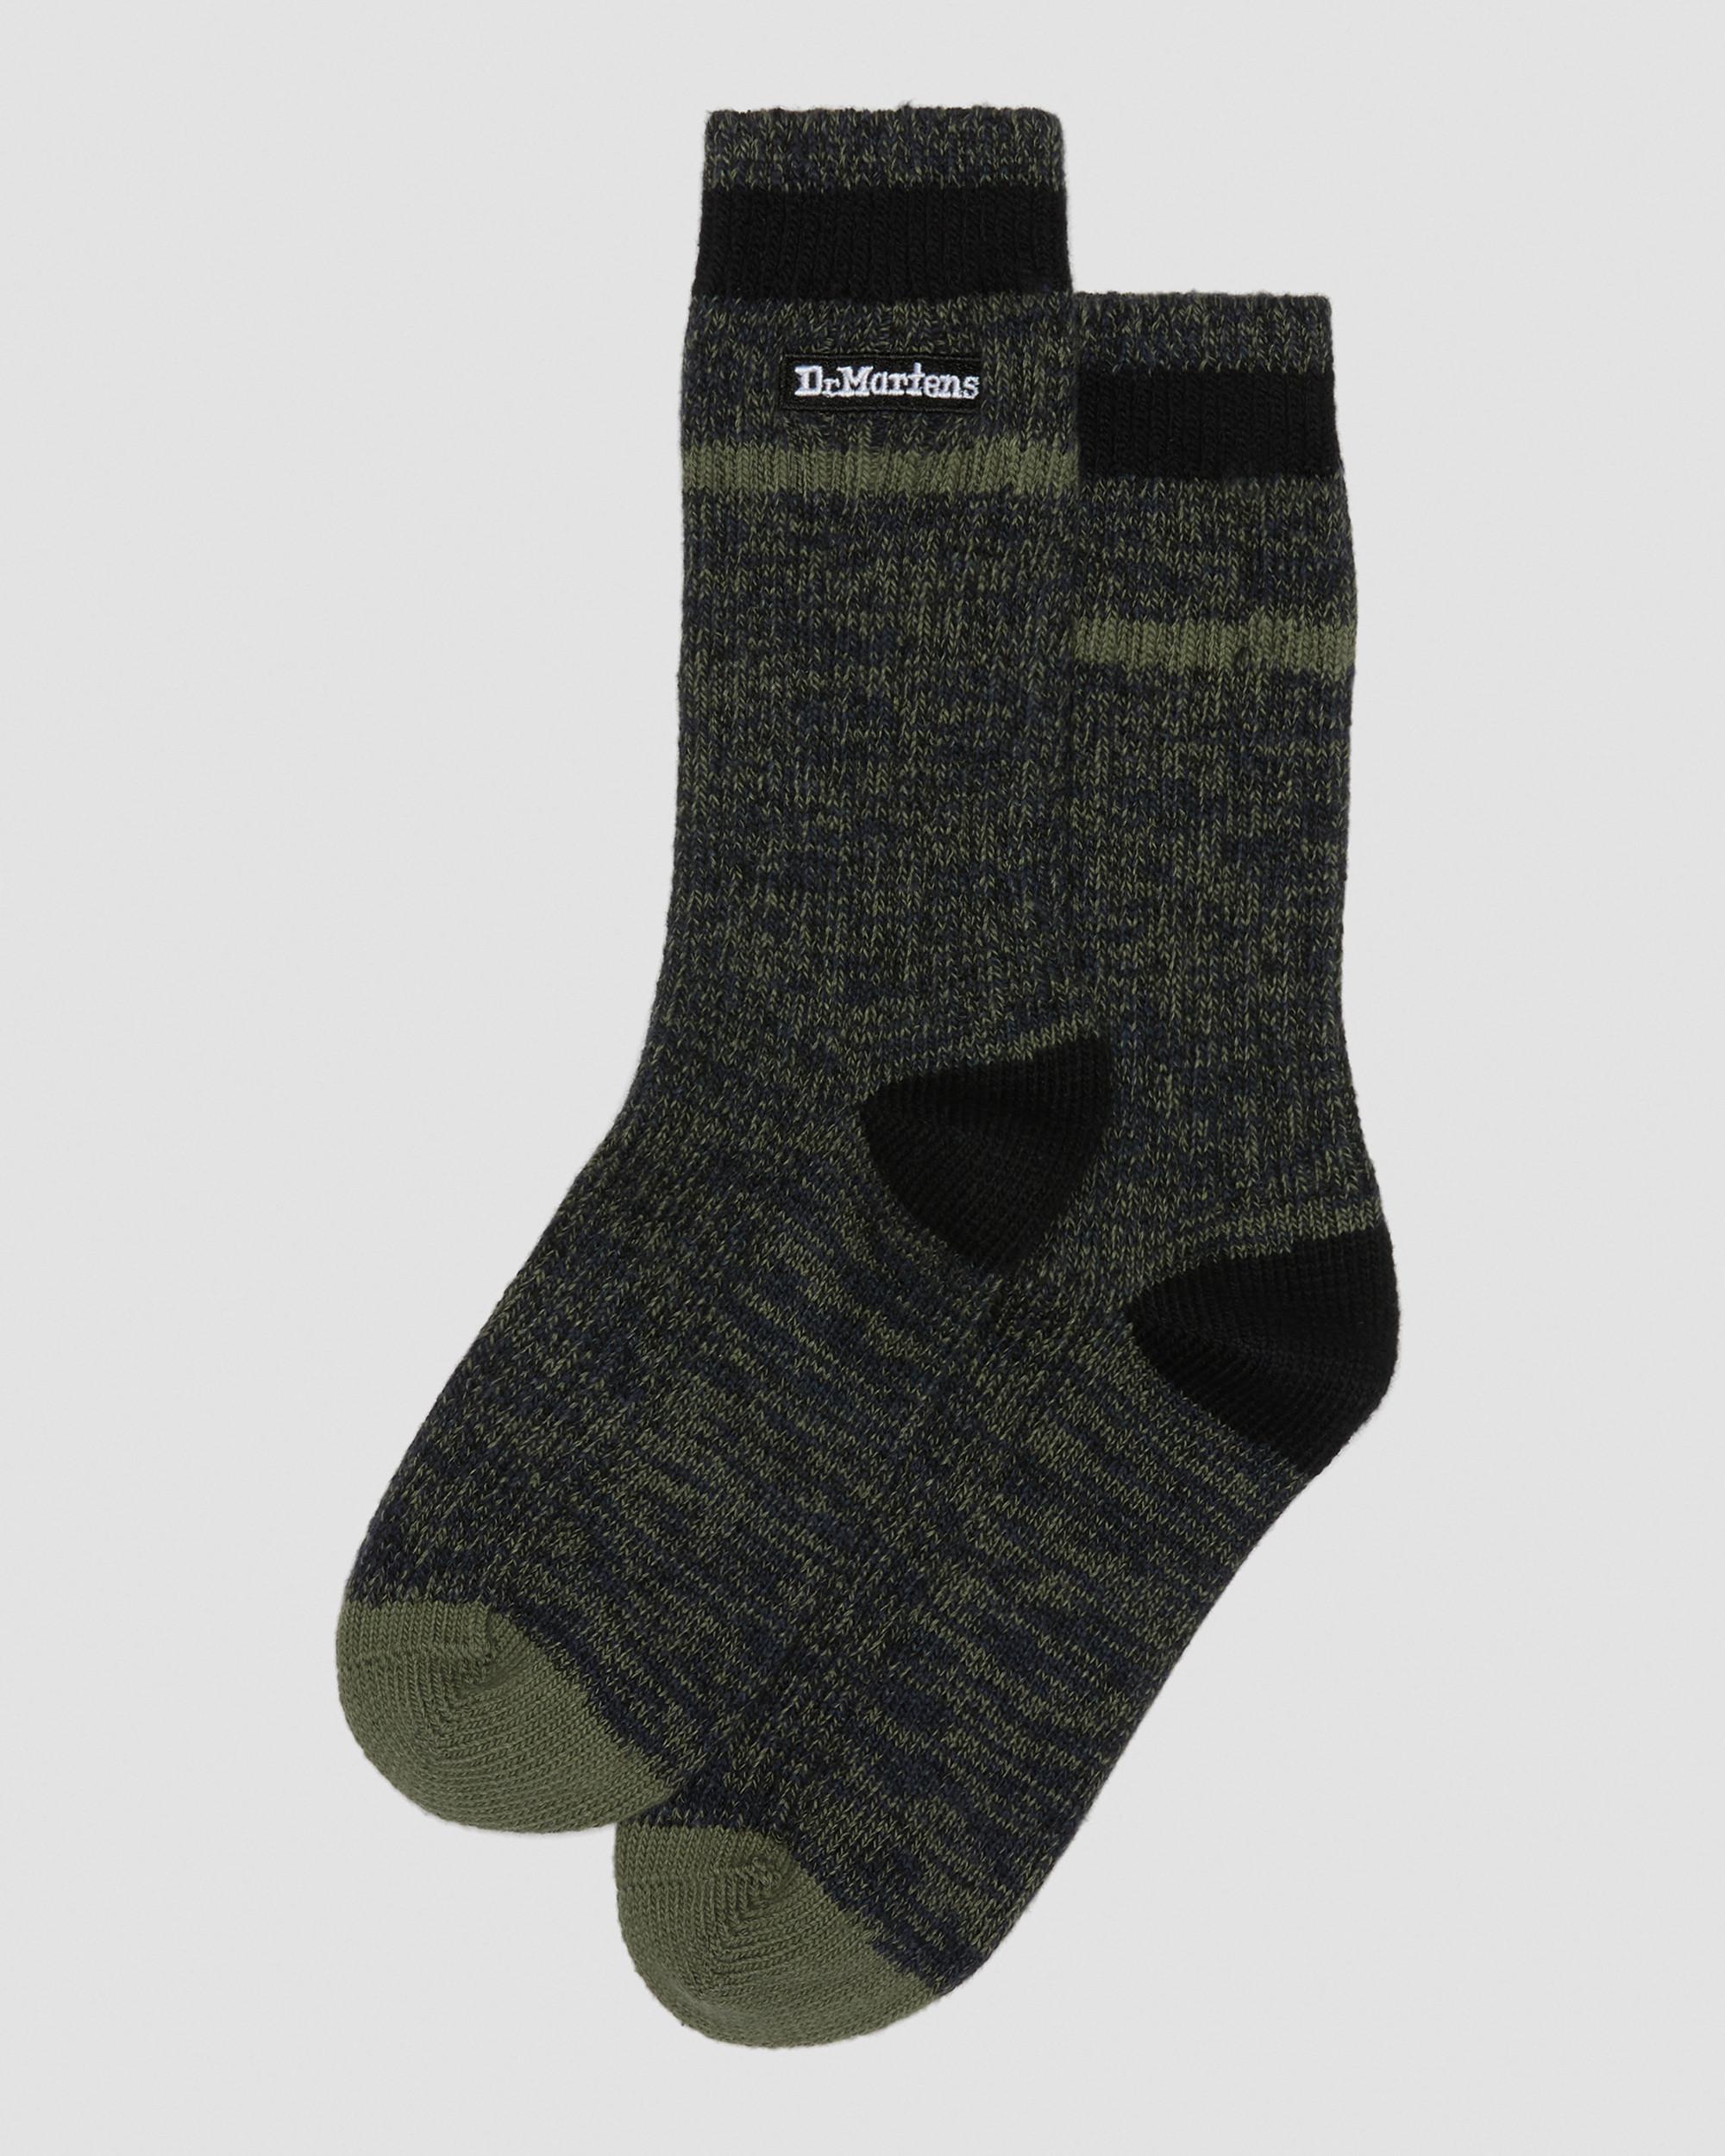 Marl Organic Socks in Black | Dr. Martens